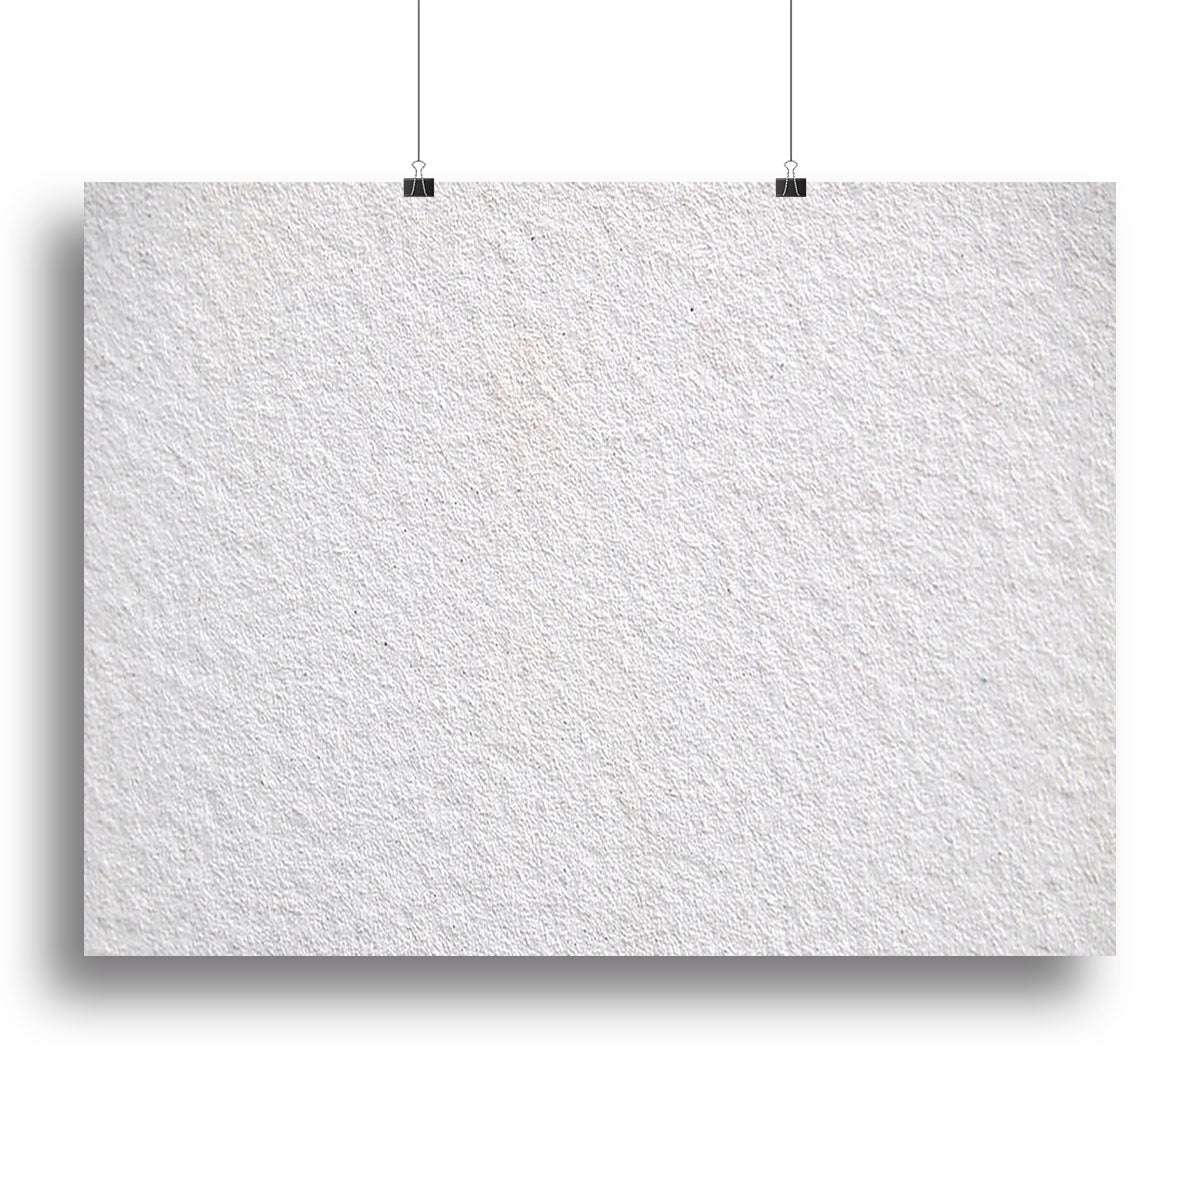 Cement texture Canvas Print or Poster - Canvas Art Rocks - 2